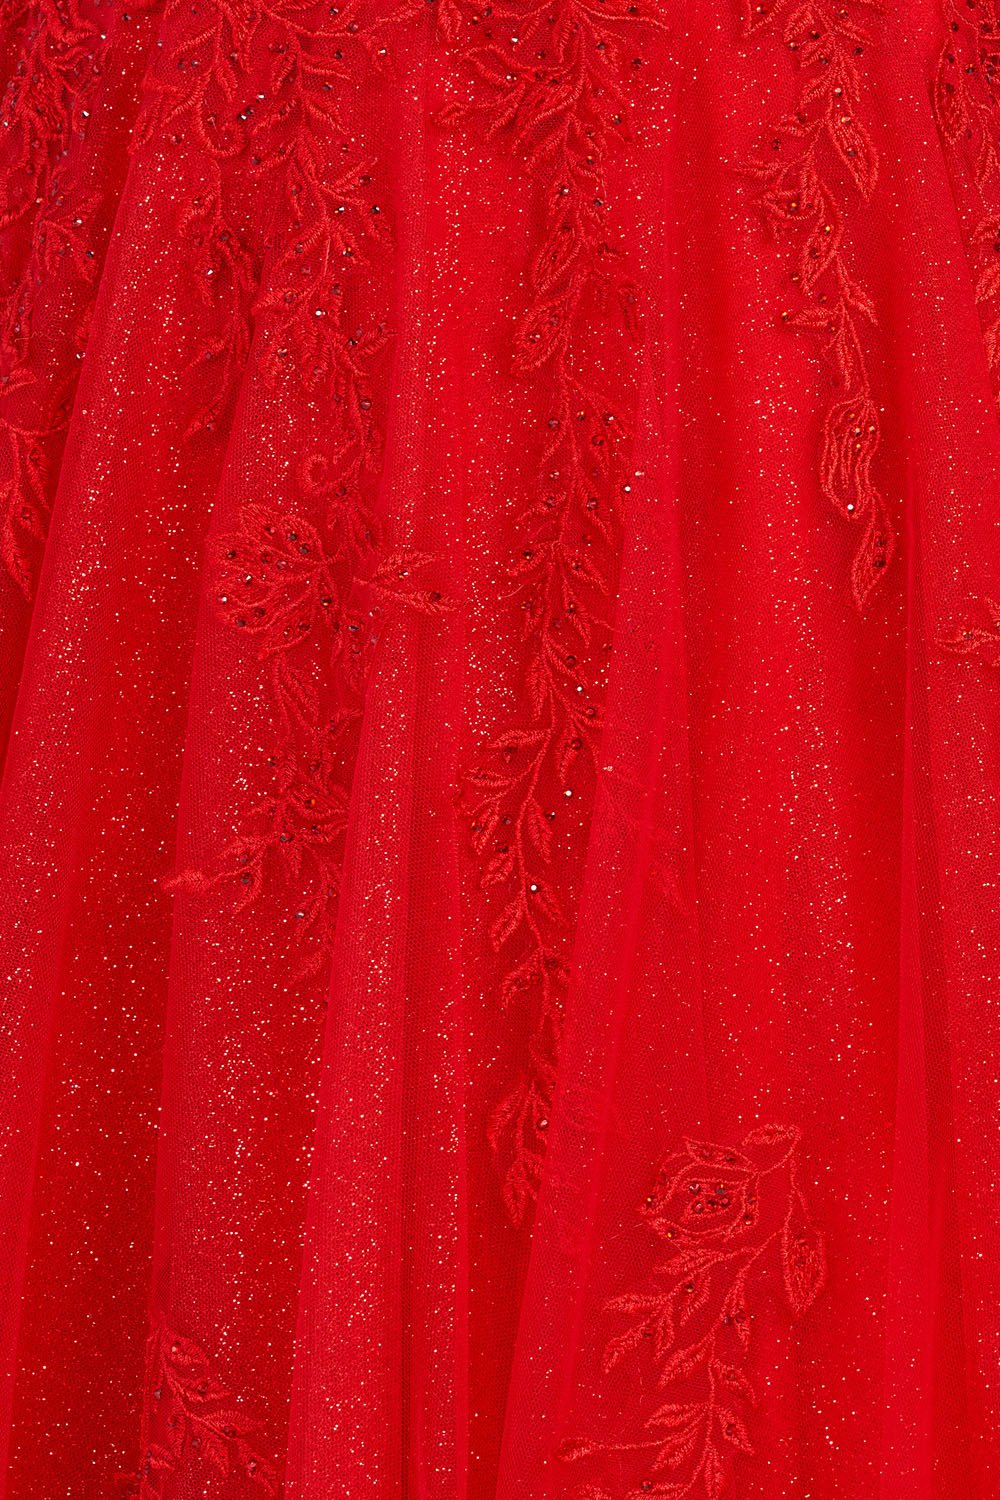 Ellie Wilde Red EW122076 Prom Dress Image.  Red formal dress.